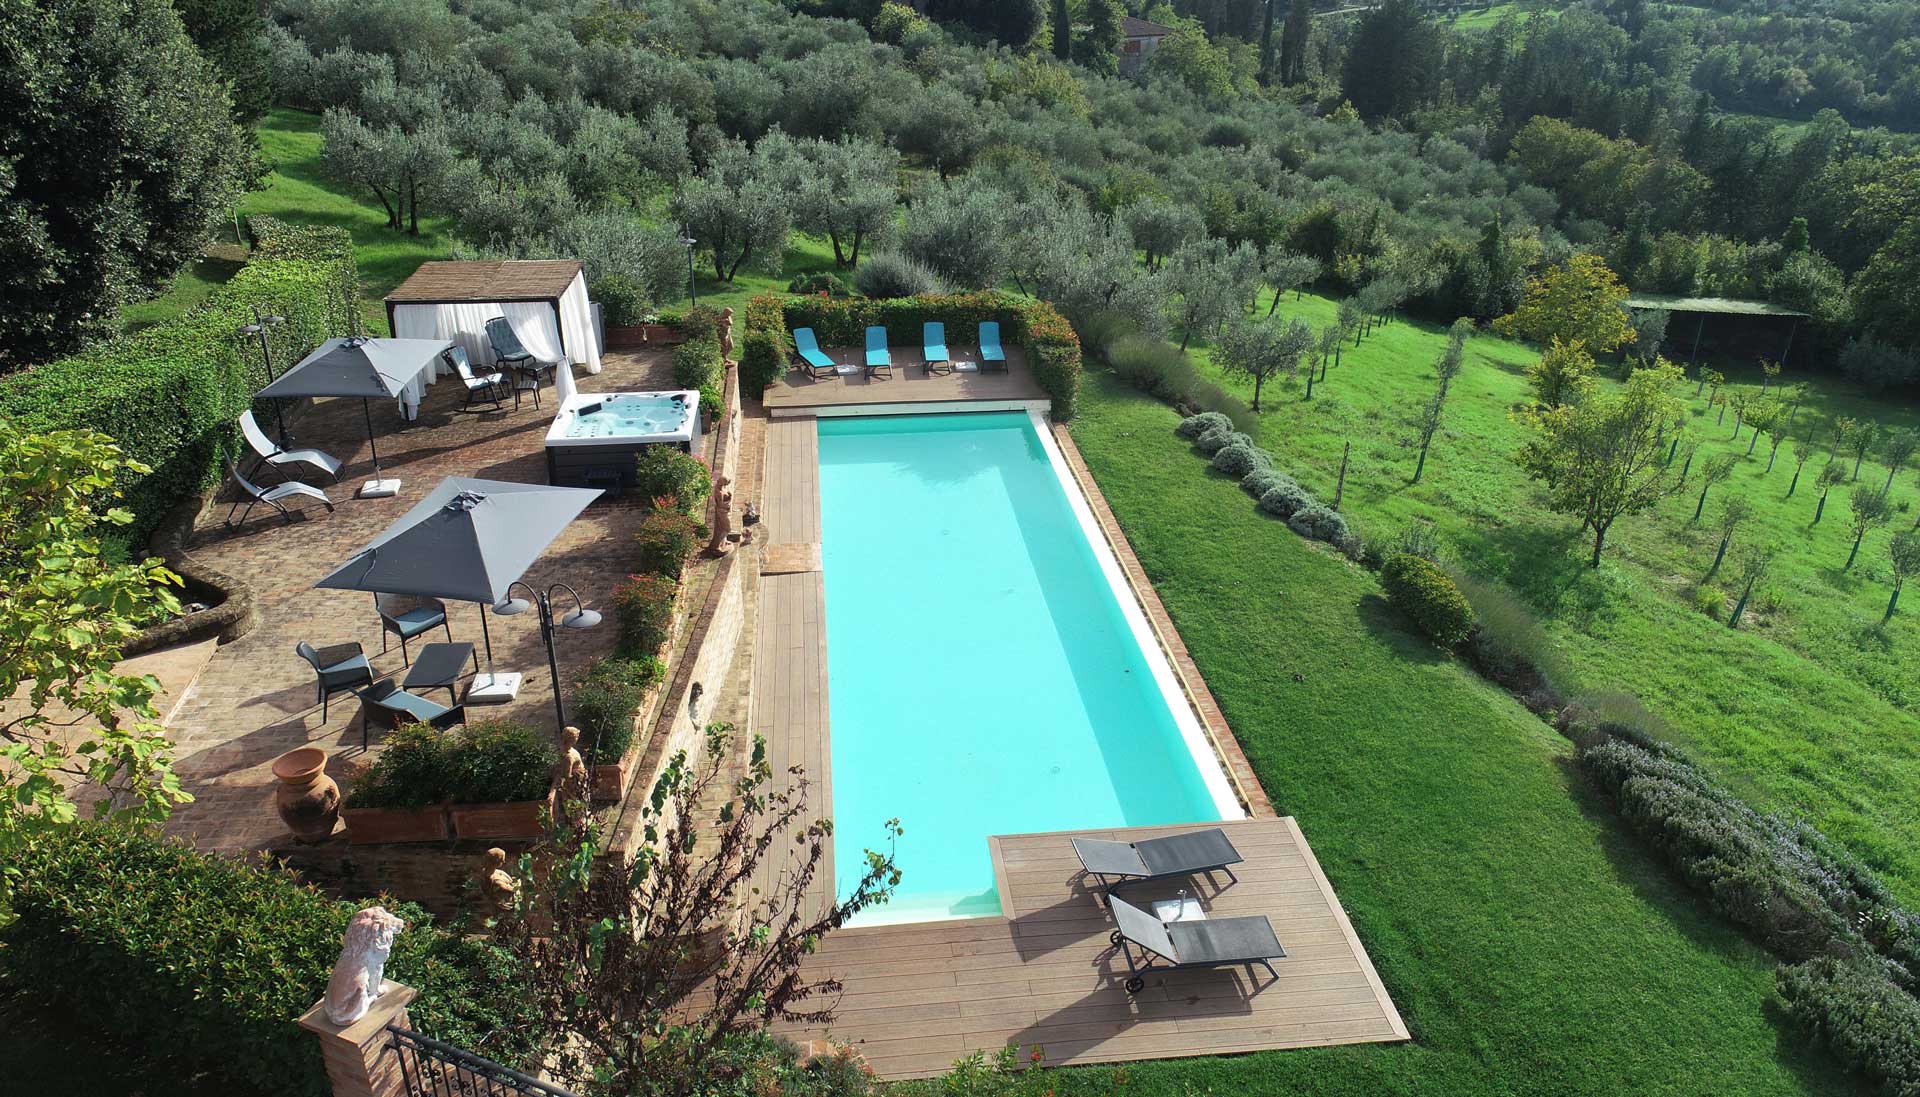 Villa Bellavista swimming pool; air view - villa rentals by Timeless Tuscany tour operator